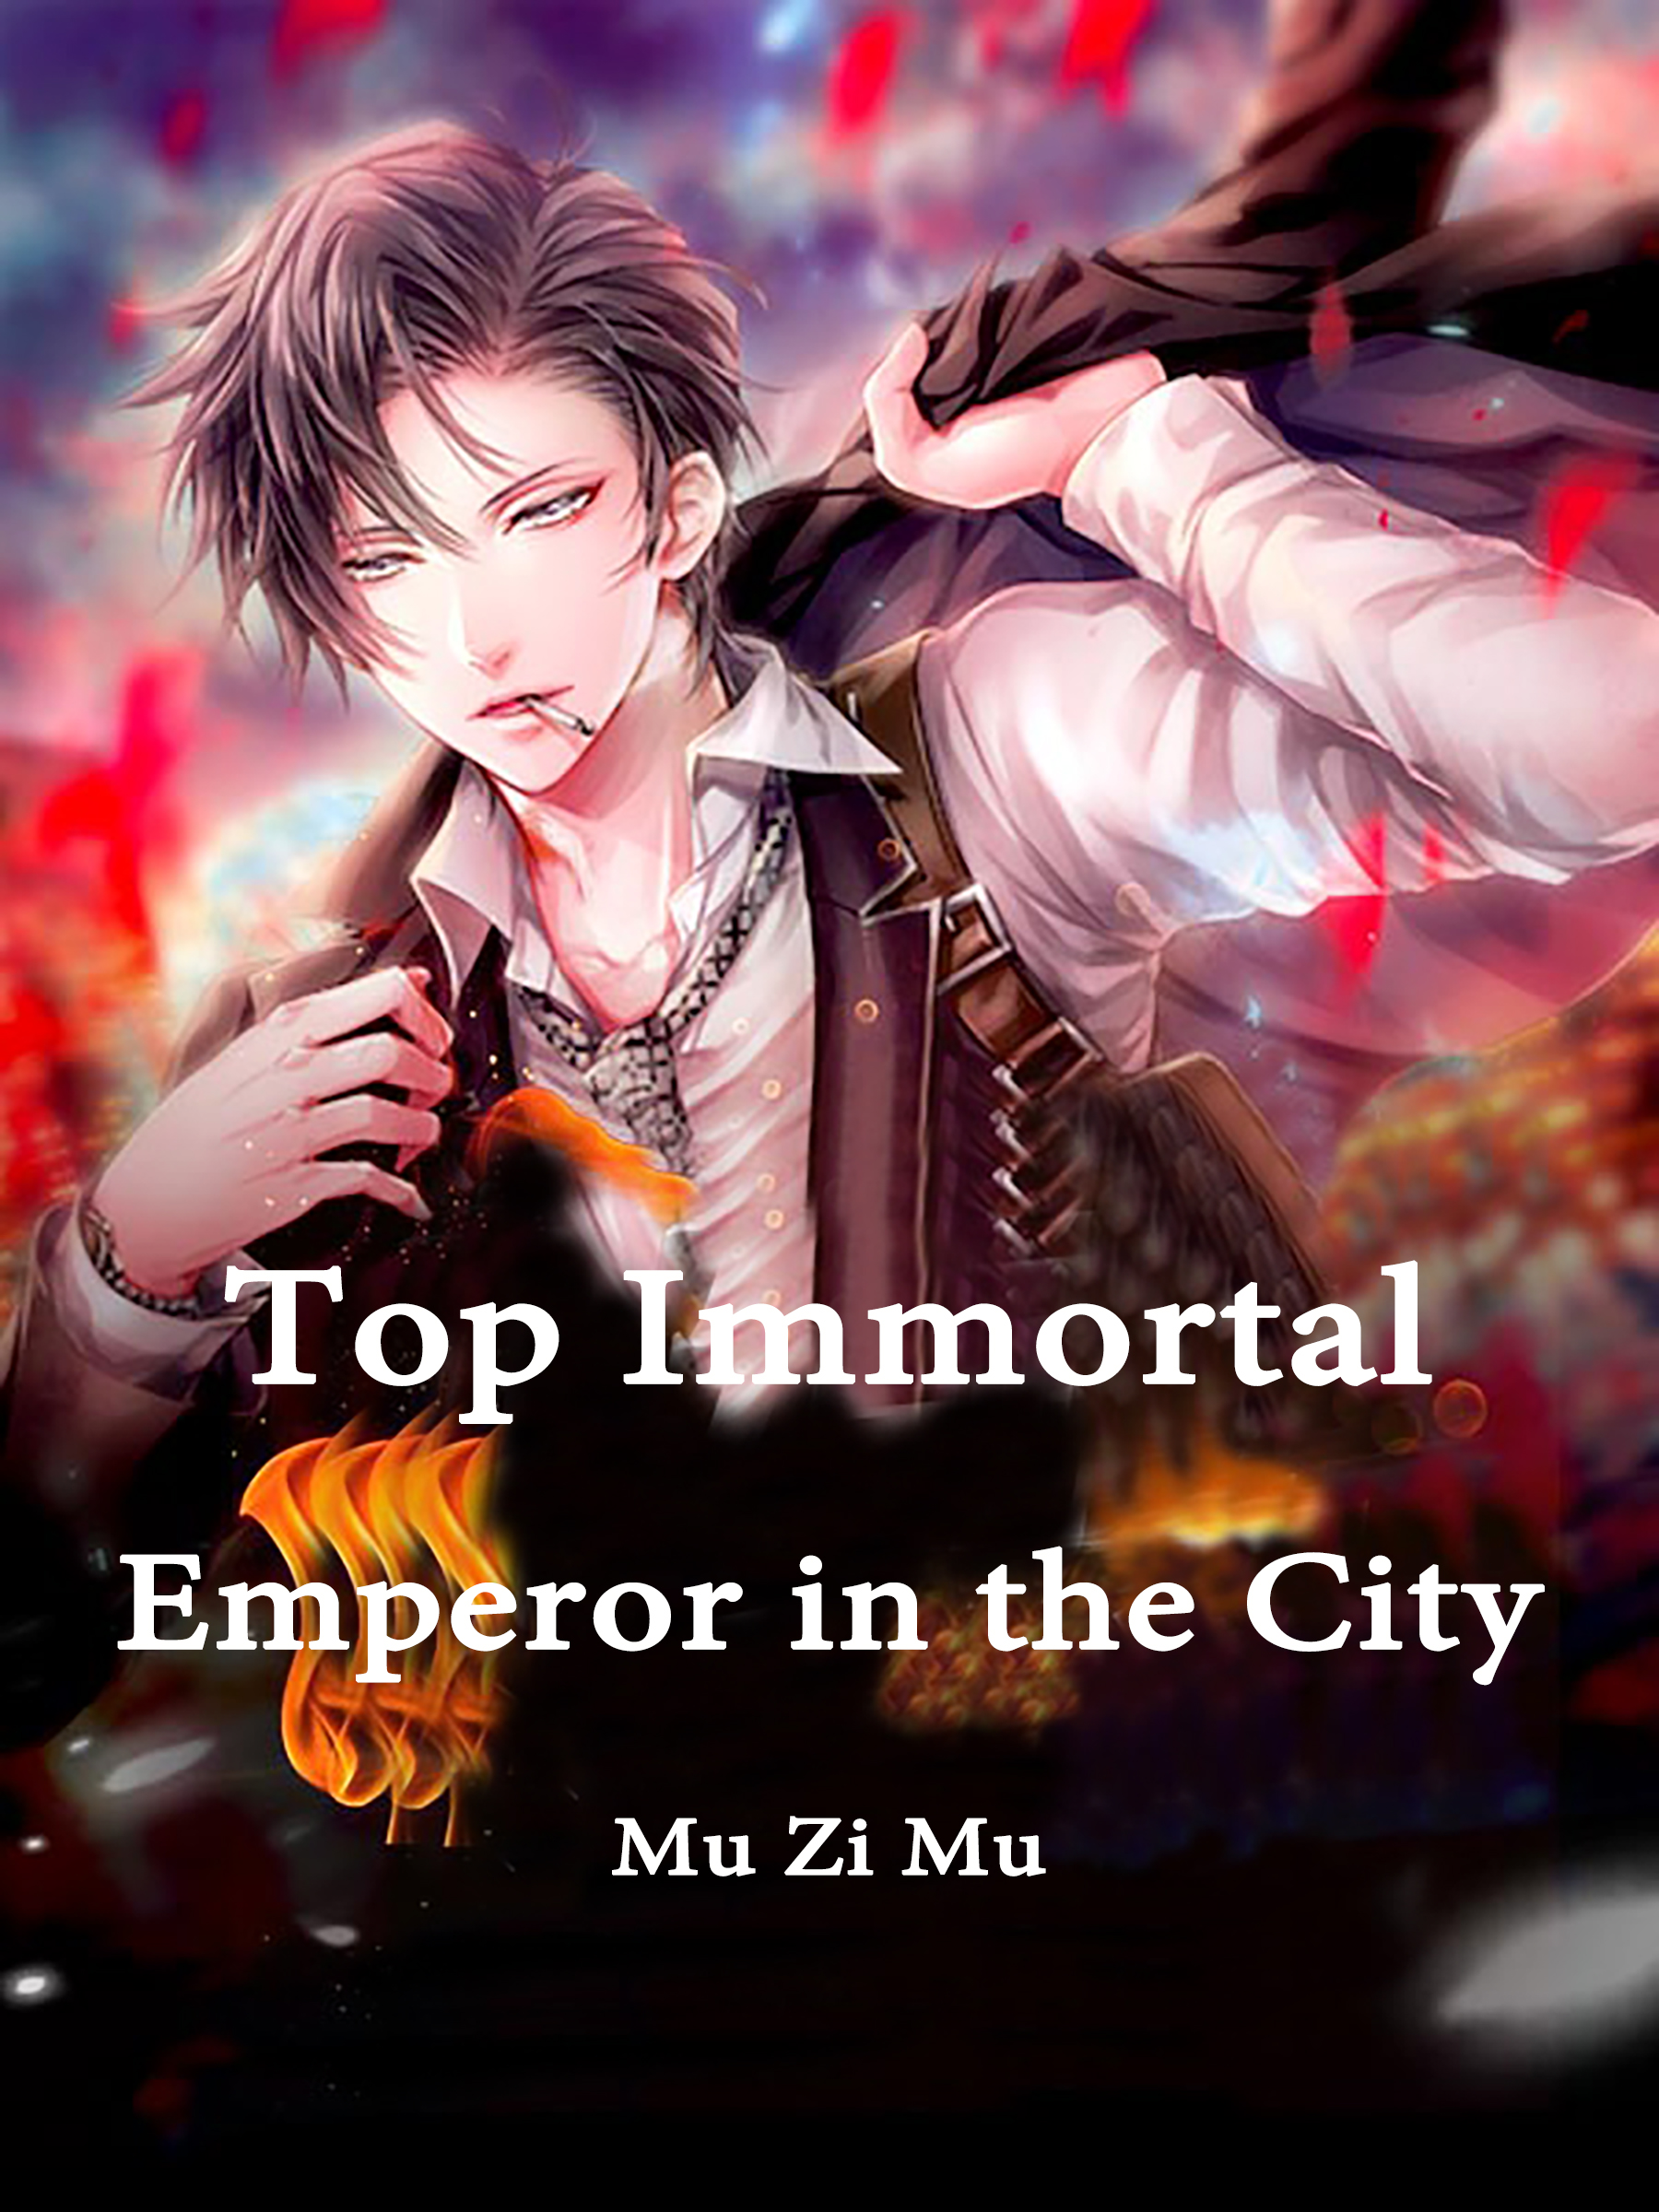 Rebirth of the Urban Immortal Emperor Manga